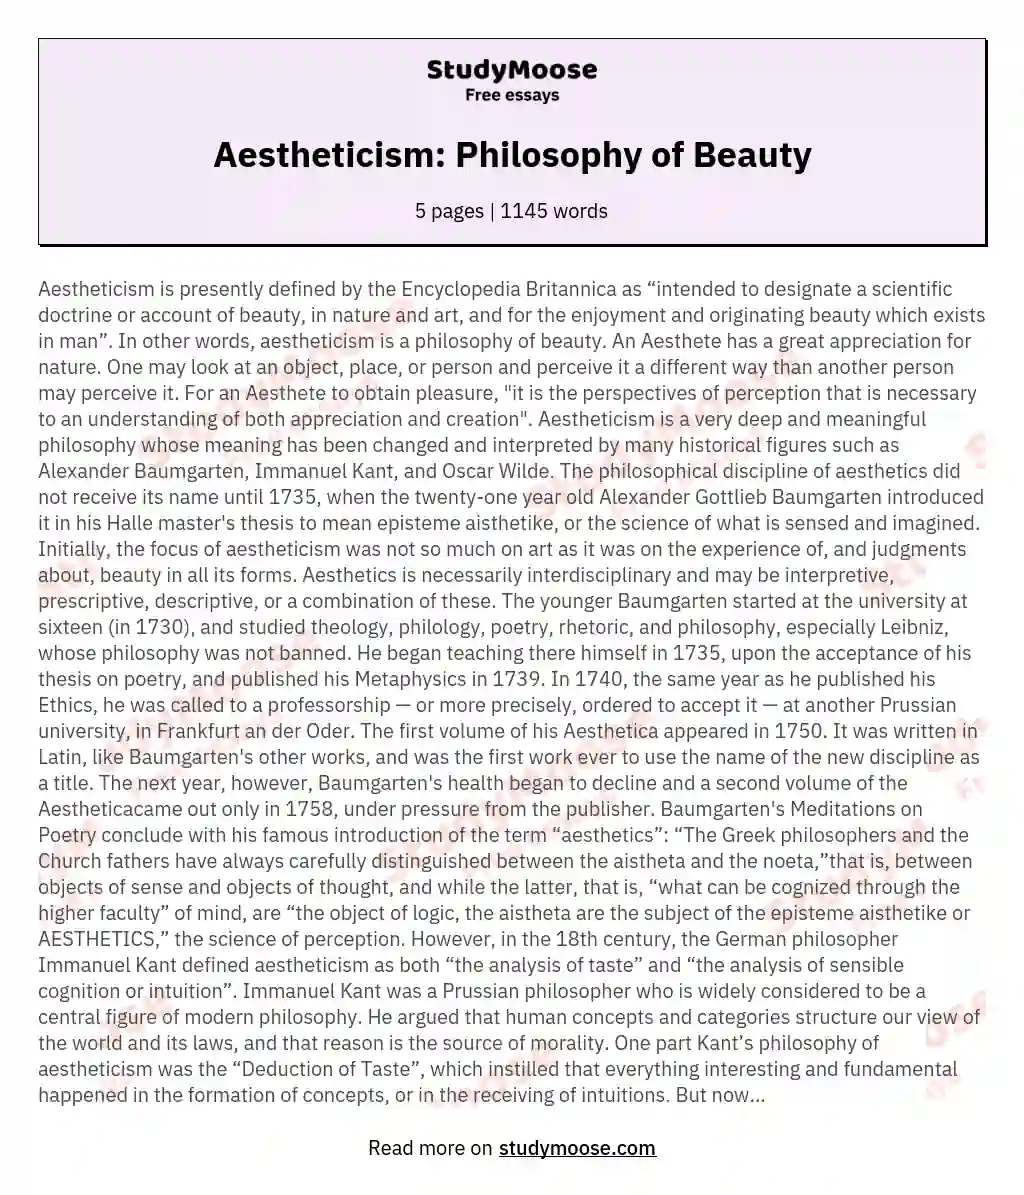 Aestheticism: Philosophy of Beauty